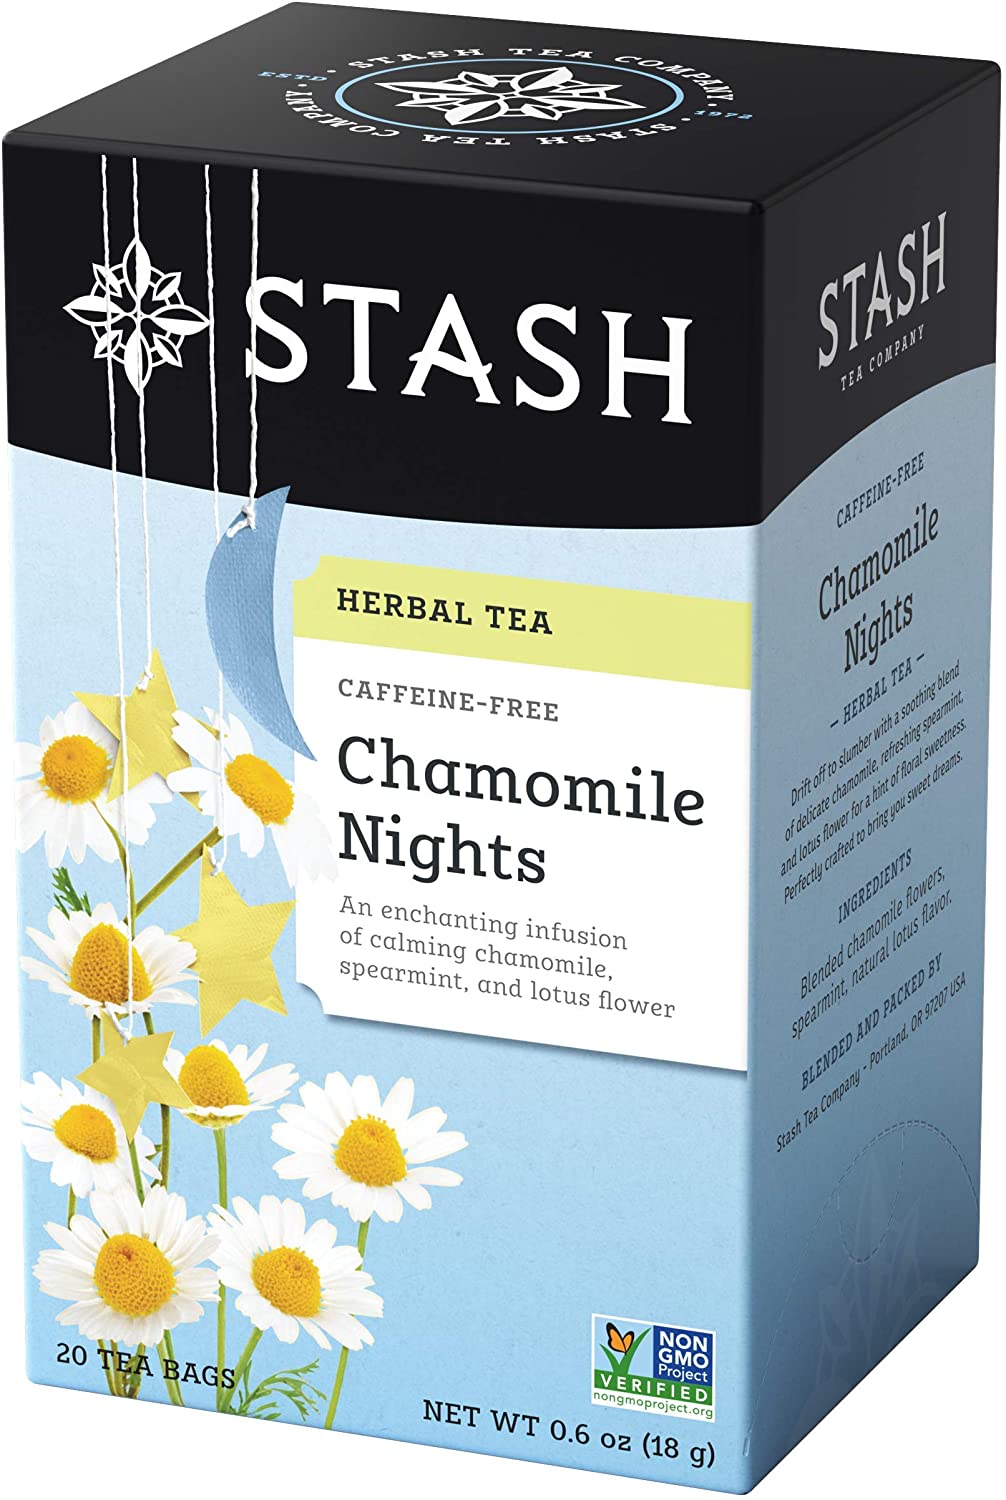 Stash Chamomile Nights Caffeine Free Herbal Tea Bags - 20 Count